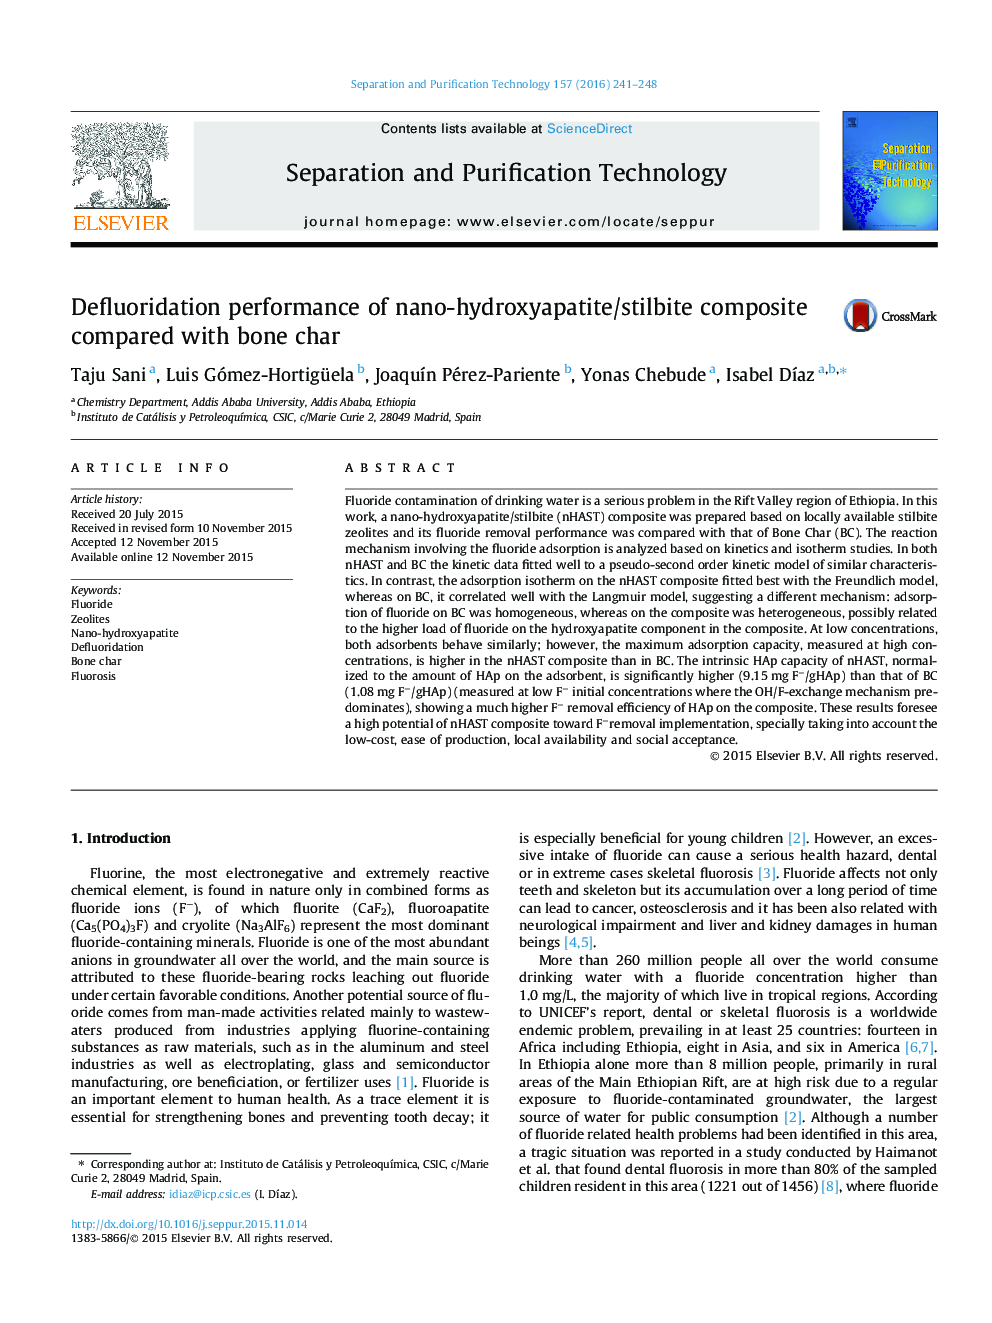 Defluoridation performance of nano-hydroxyapatite/stilbite composite compared with bone char